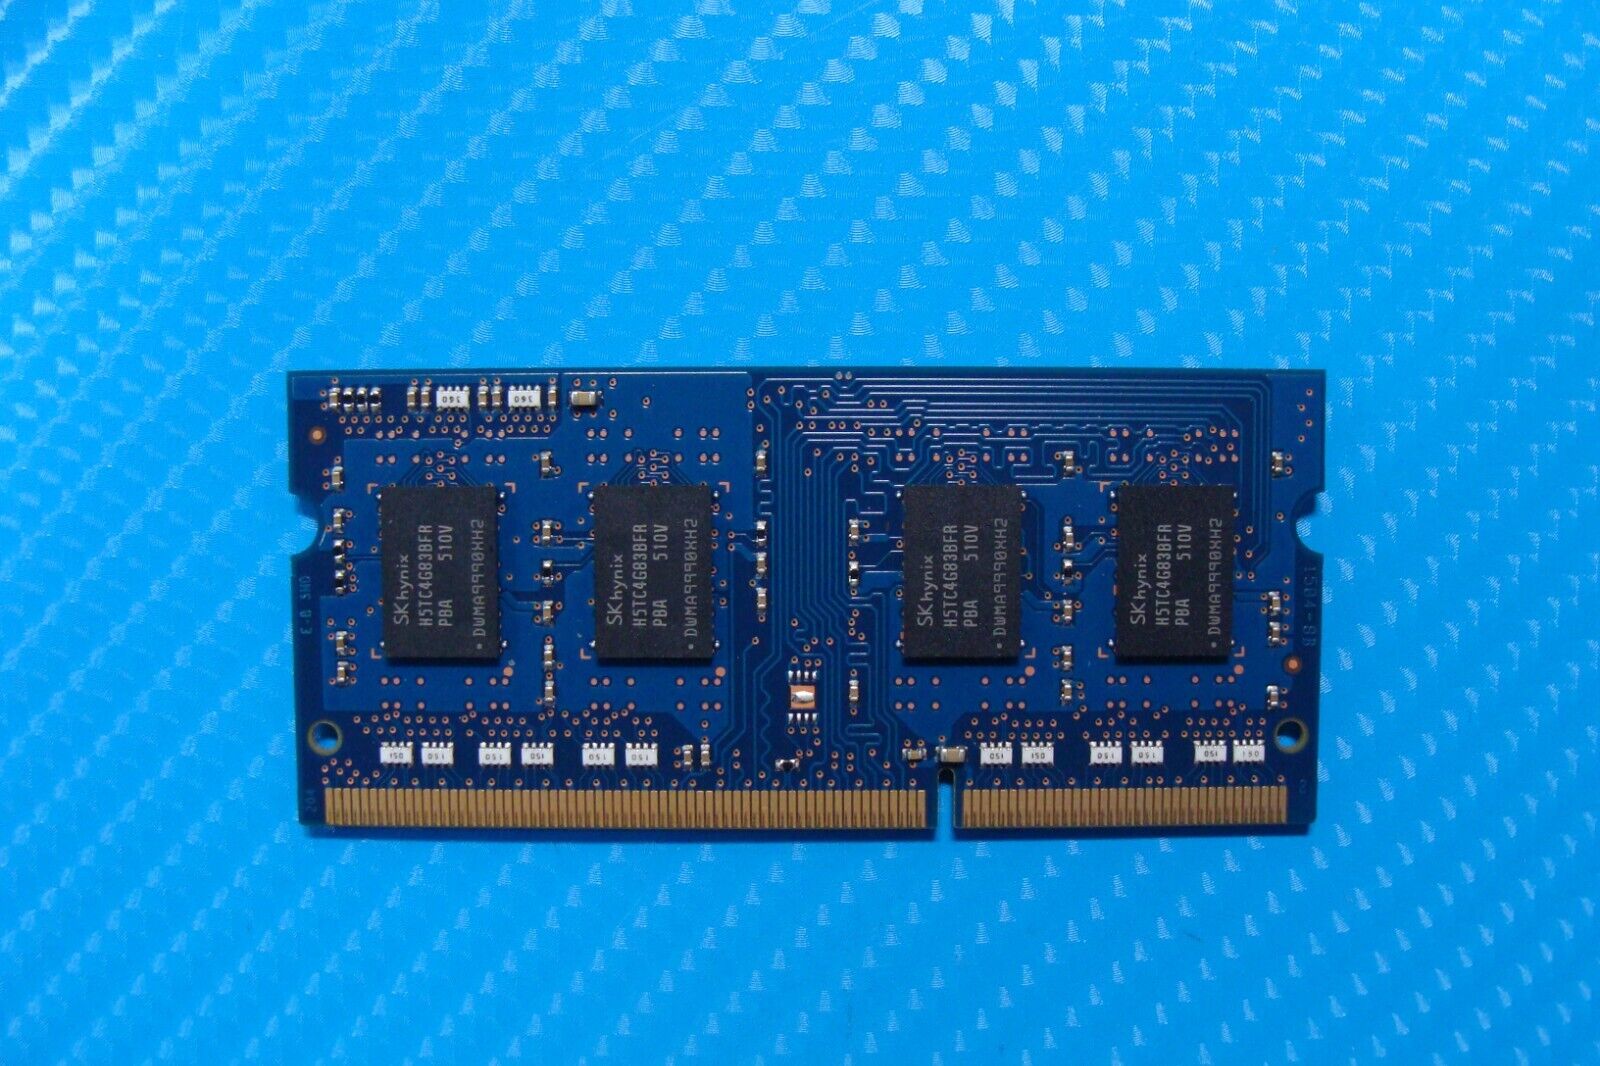 Dell 3570 SK Hynix 4GB 1Rx8 PC3L-12800S SO-DIMM Memory RAM HMT451S6BFR8A-PB